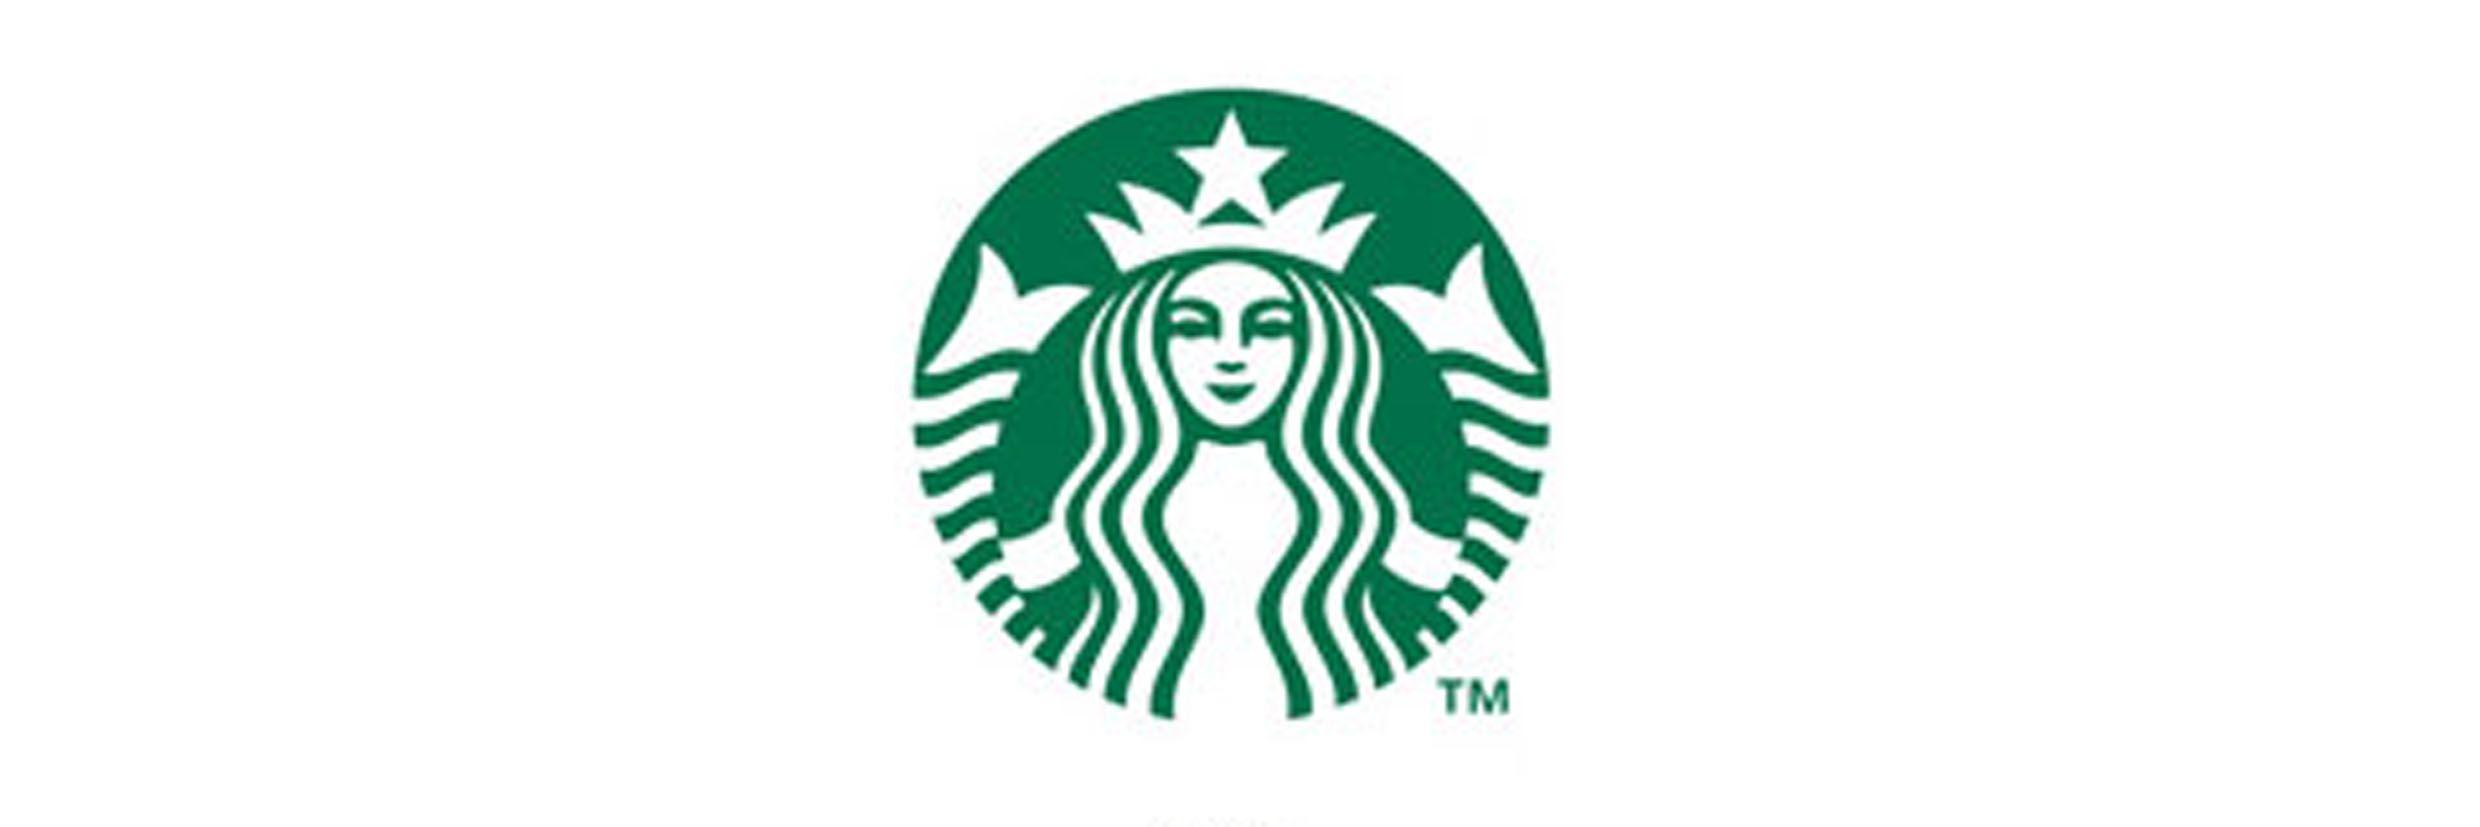 Mini Printable Starbucks Logo - Printable starbucks Logos